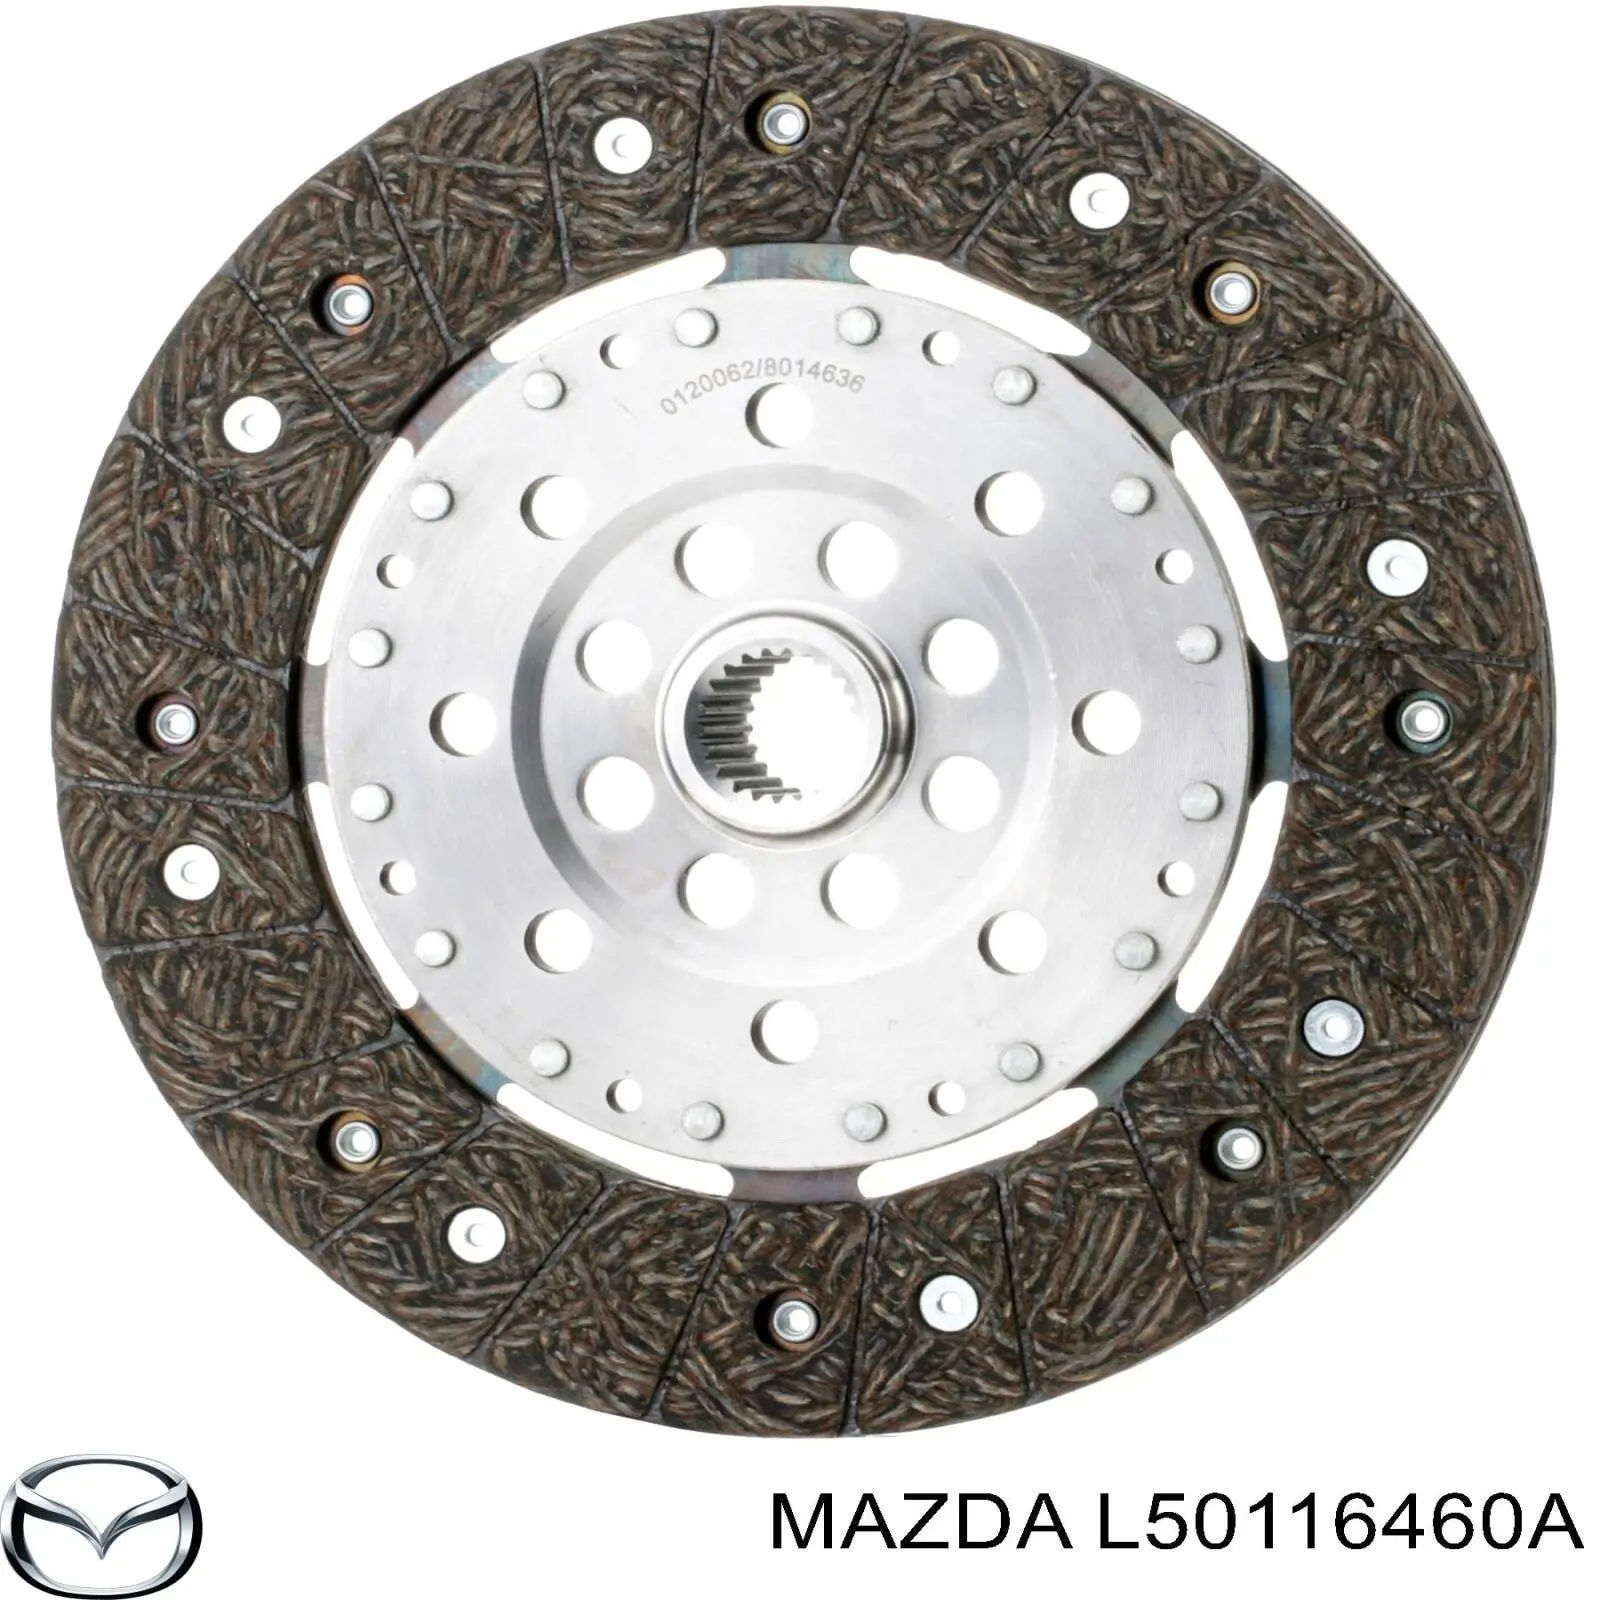 L50116460A Mazda disco de embraiagem